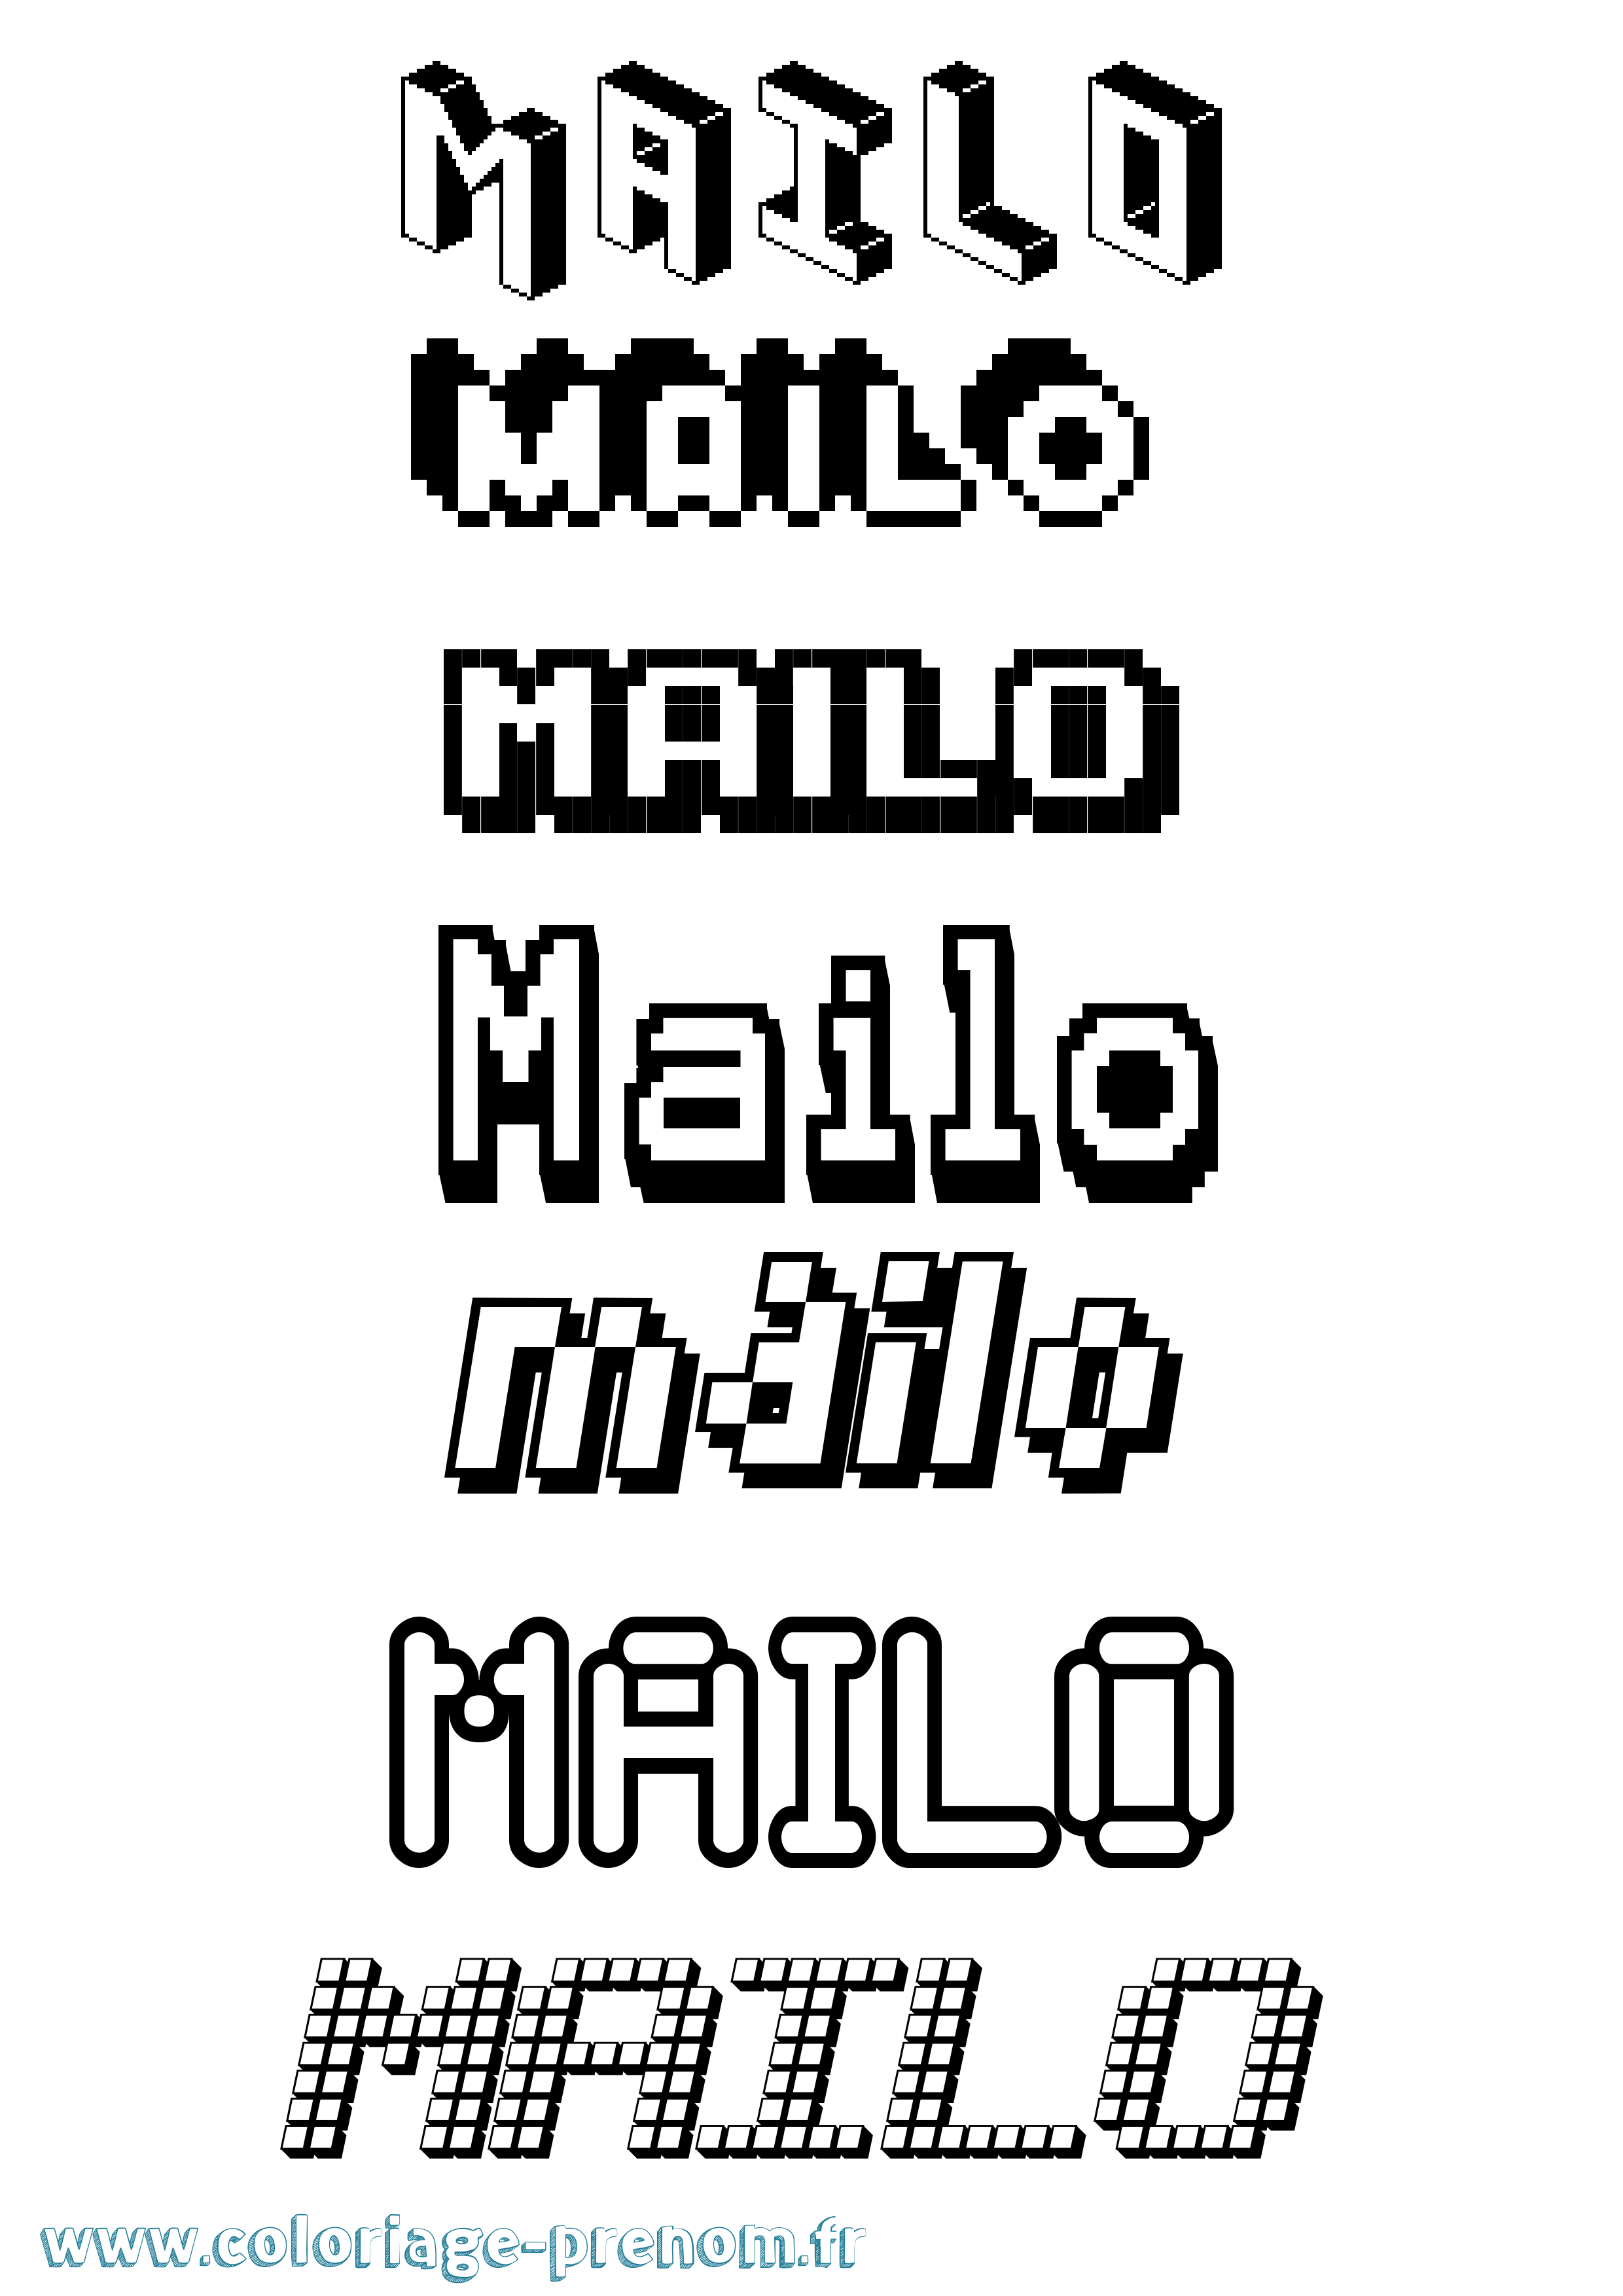 Coloriage prénom Mailo Pixel